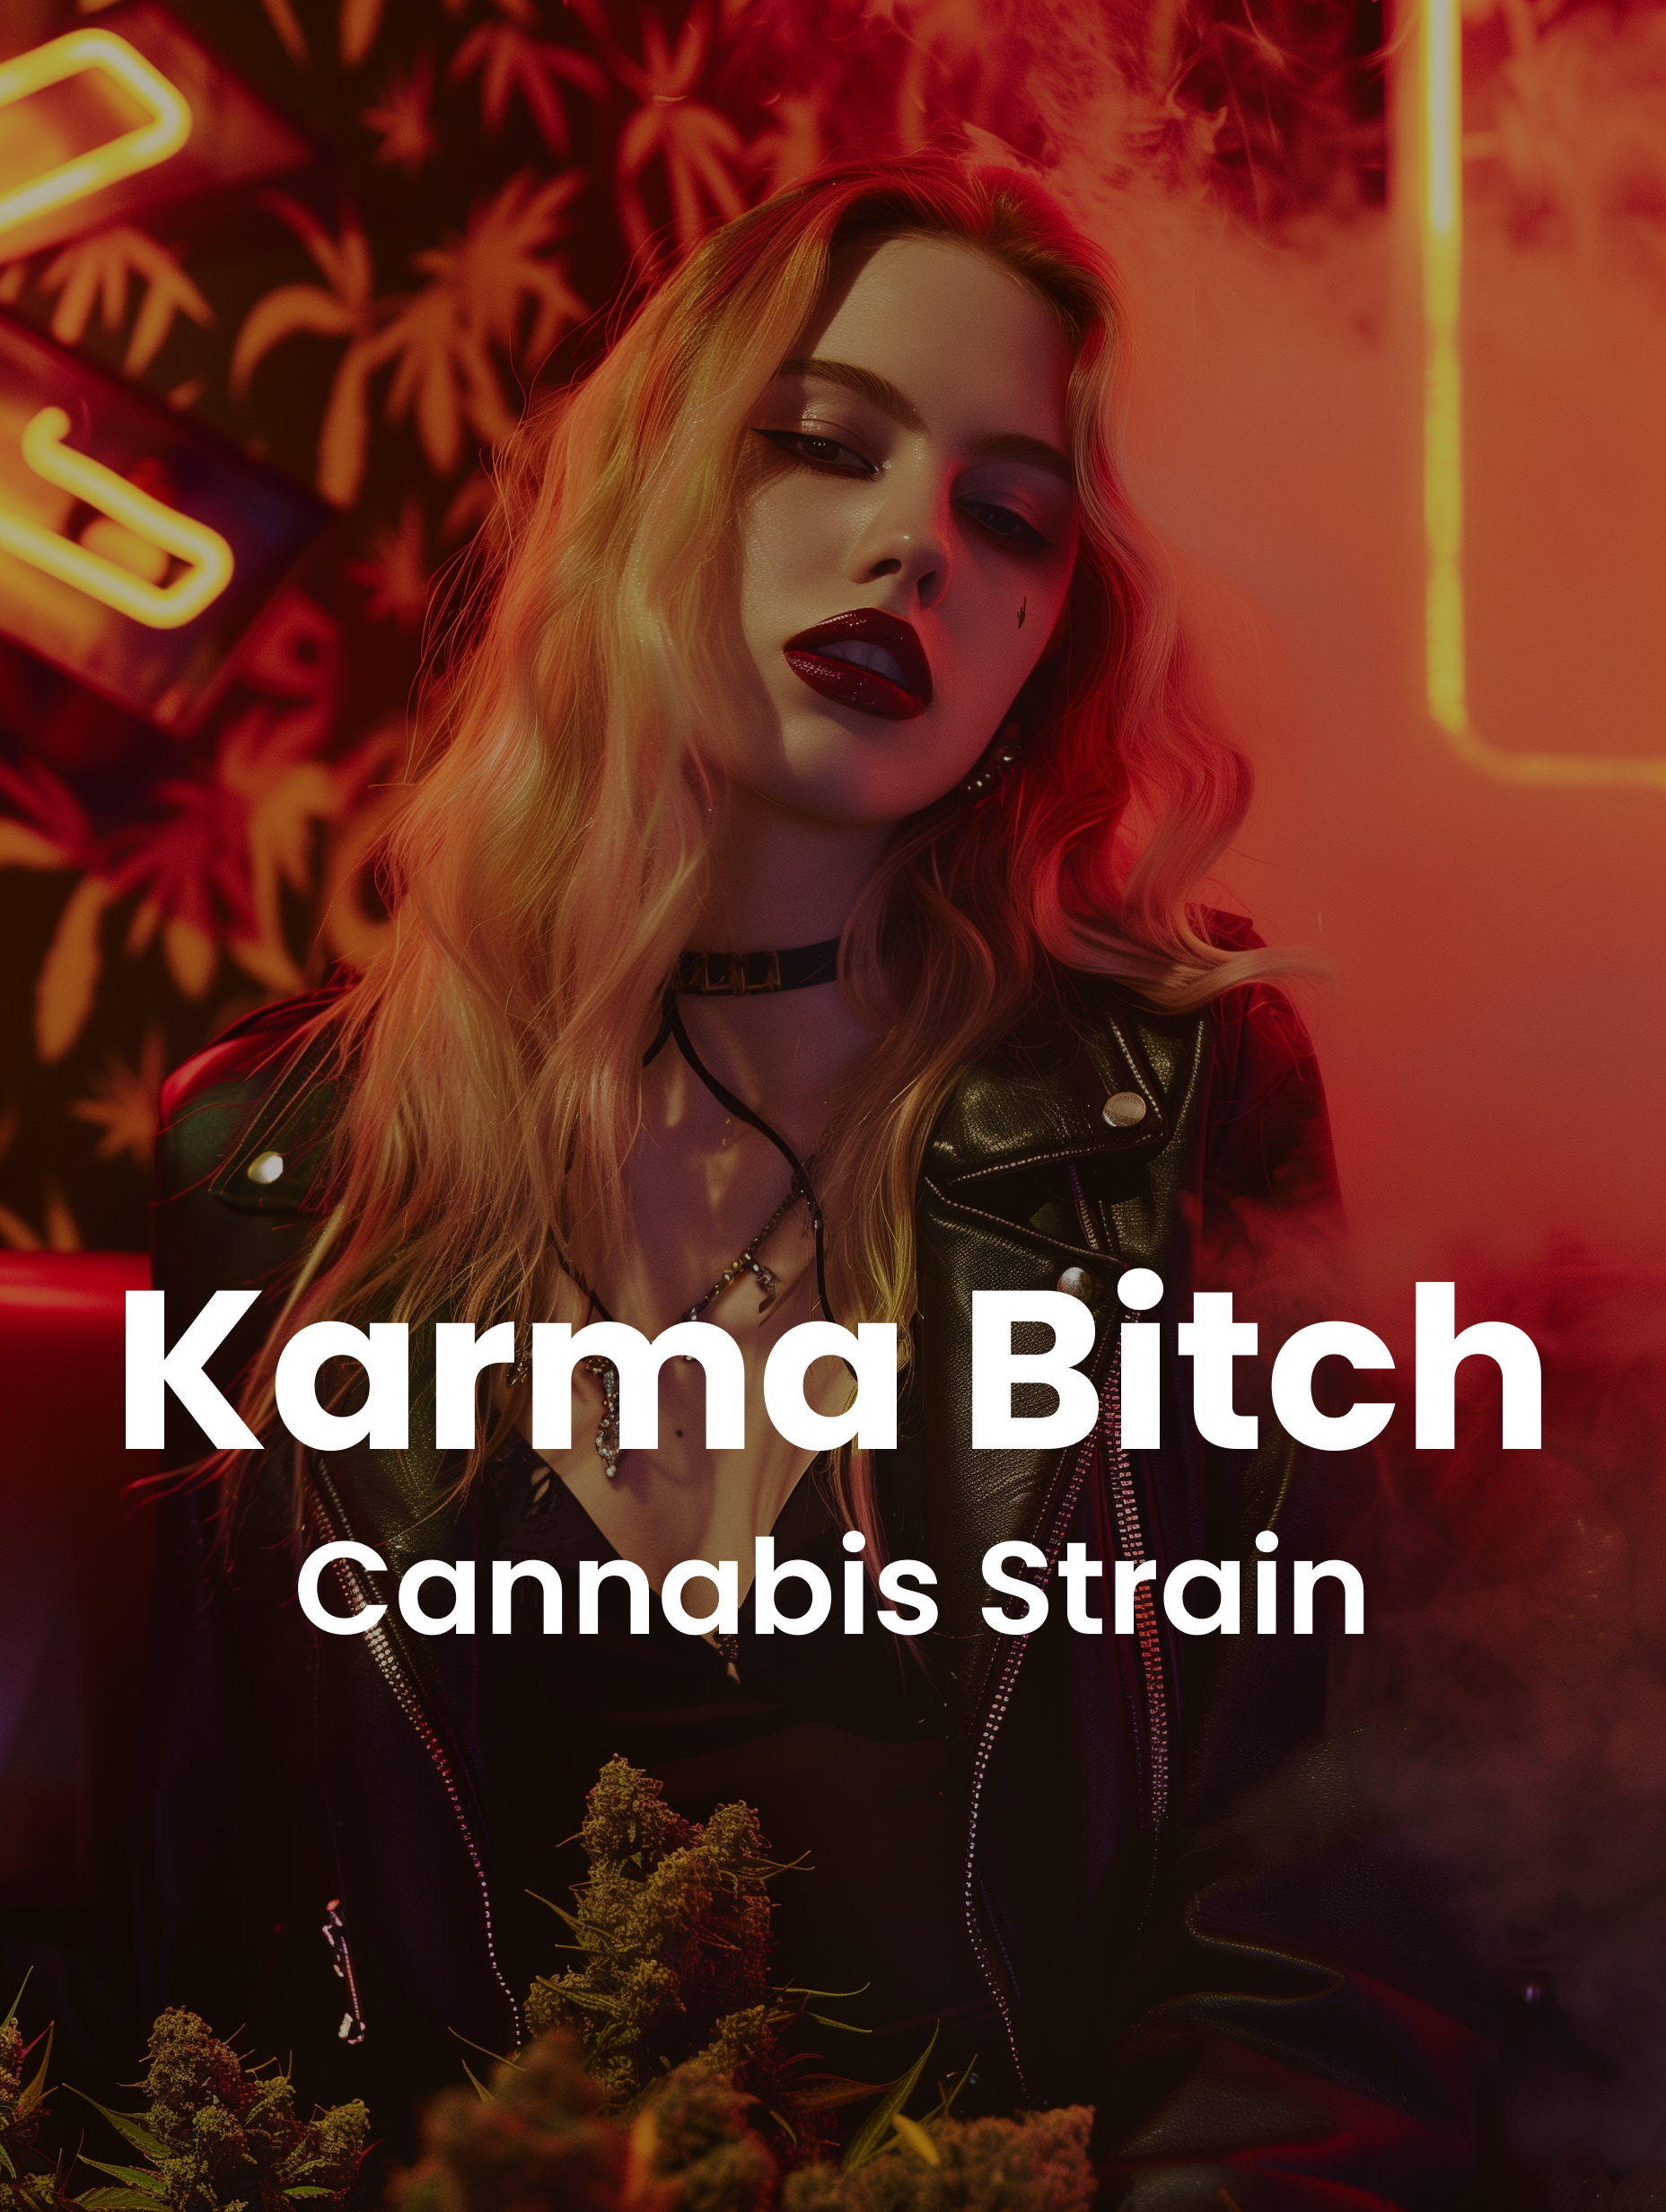 Karma Bitch Cannabis Strain